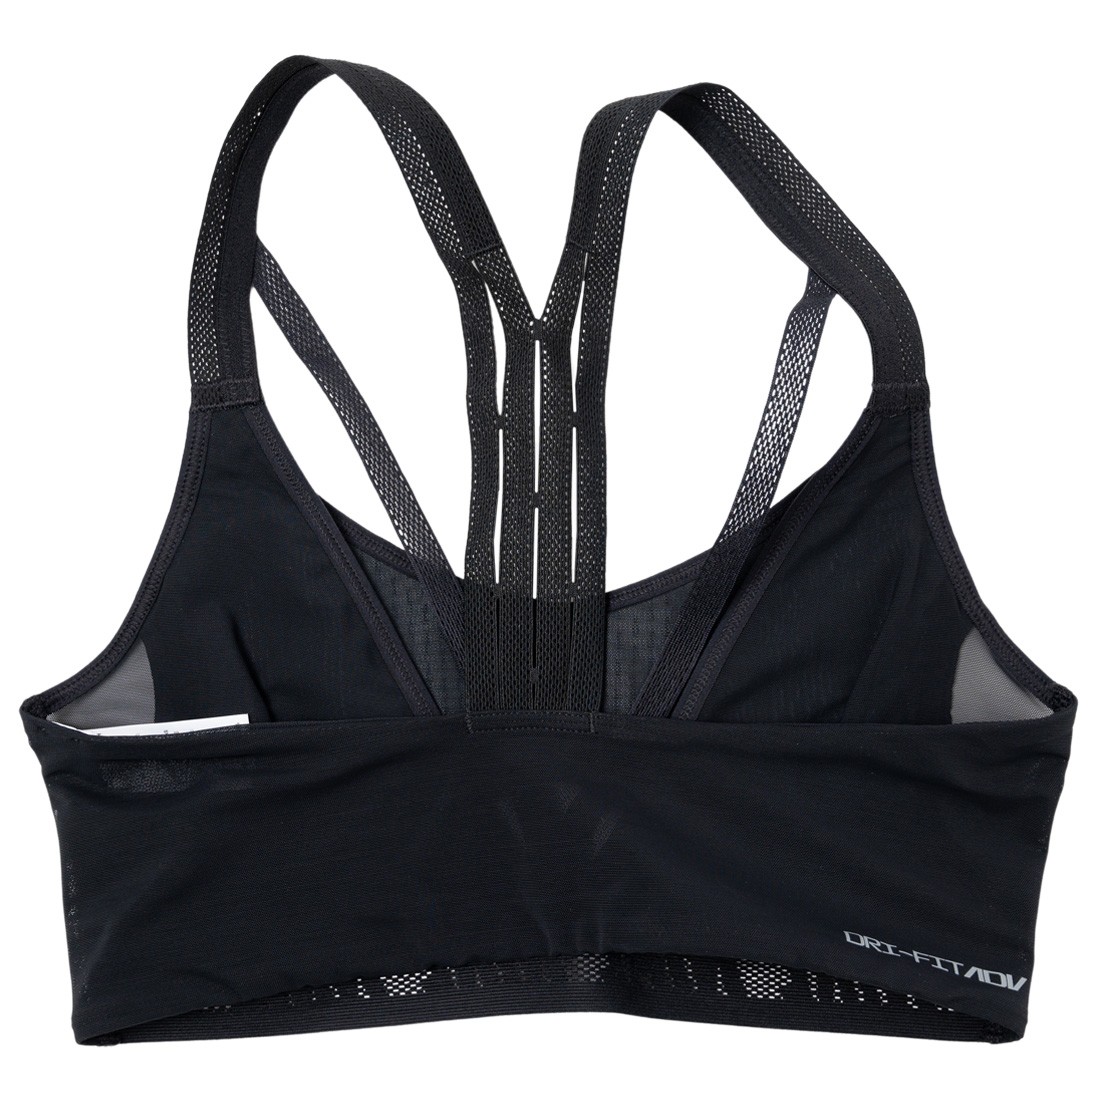 Womens sports bra Nike INDY ULTRABREATHE W black